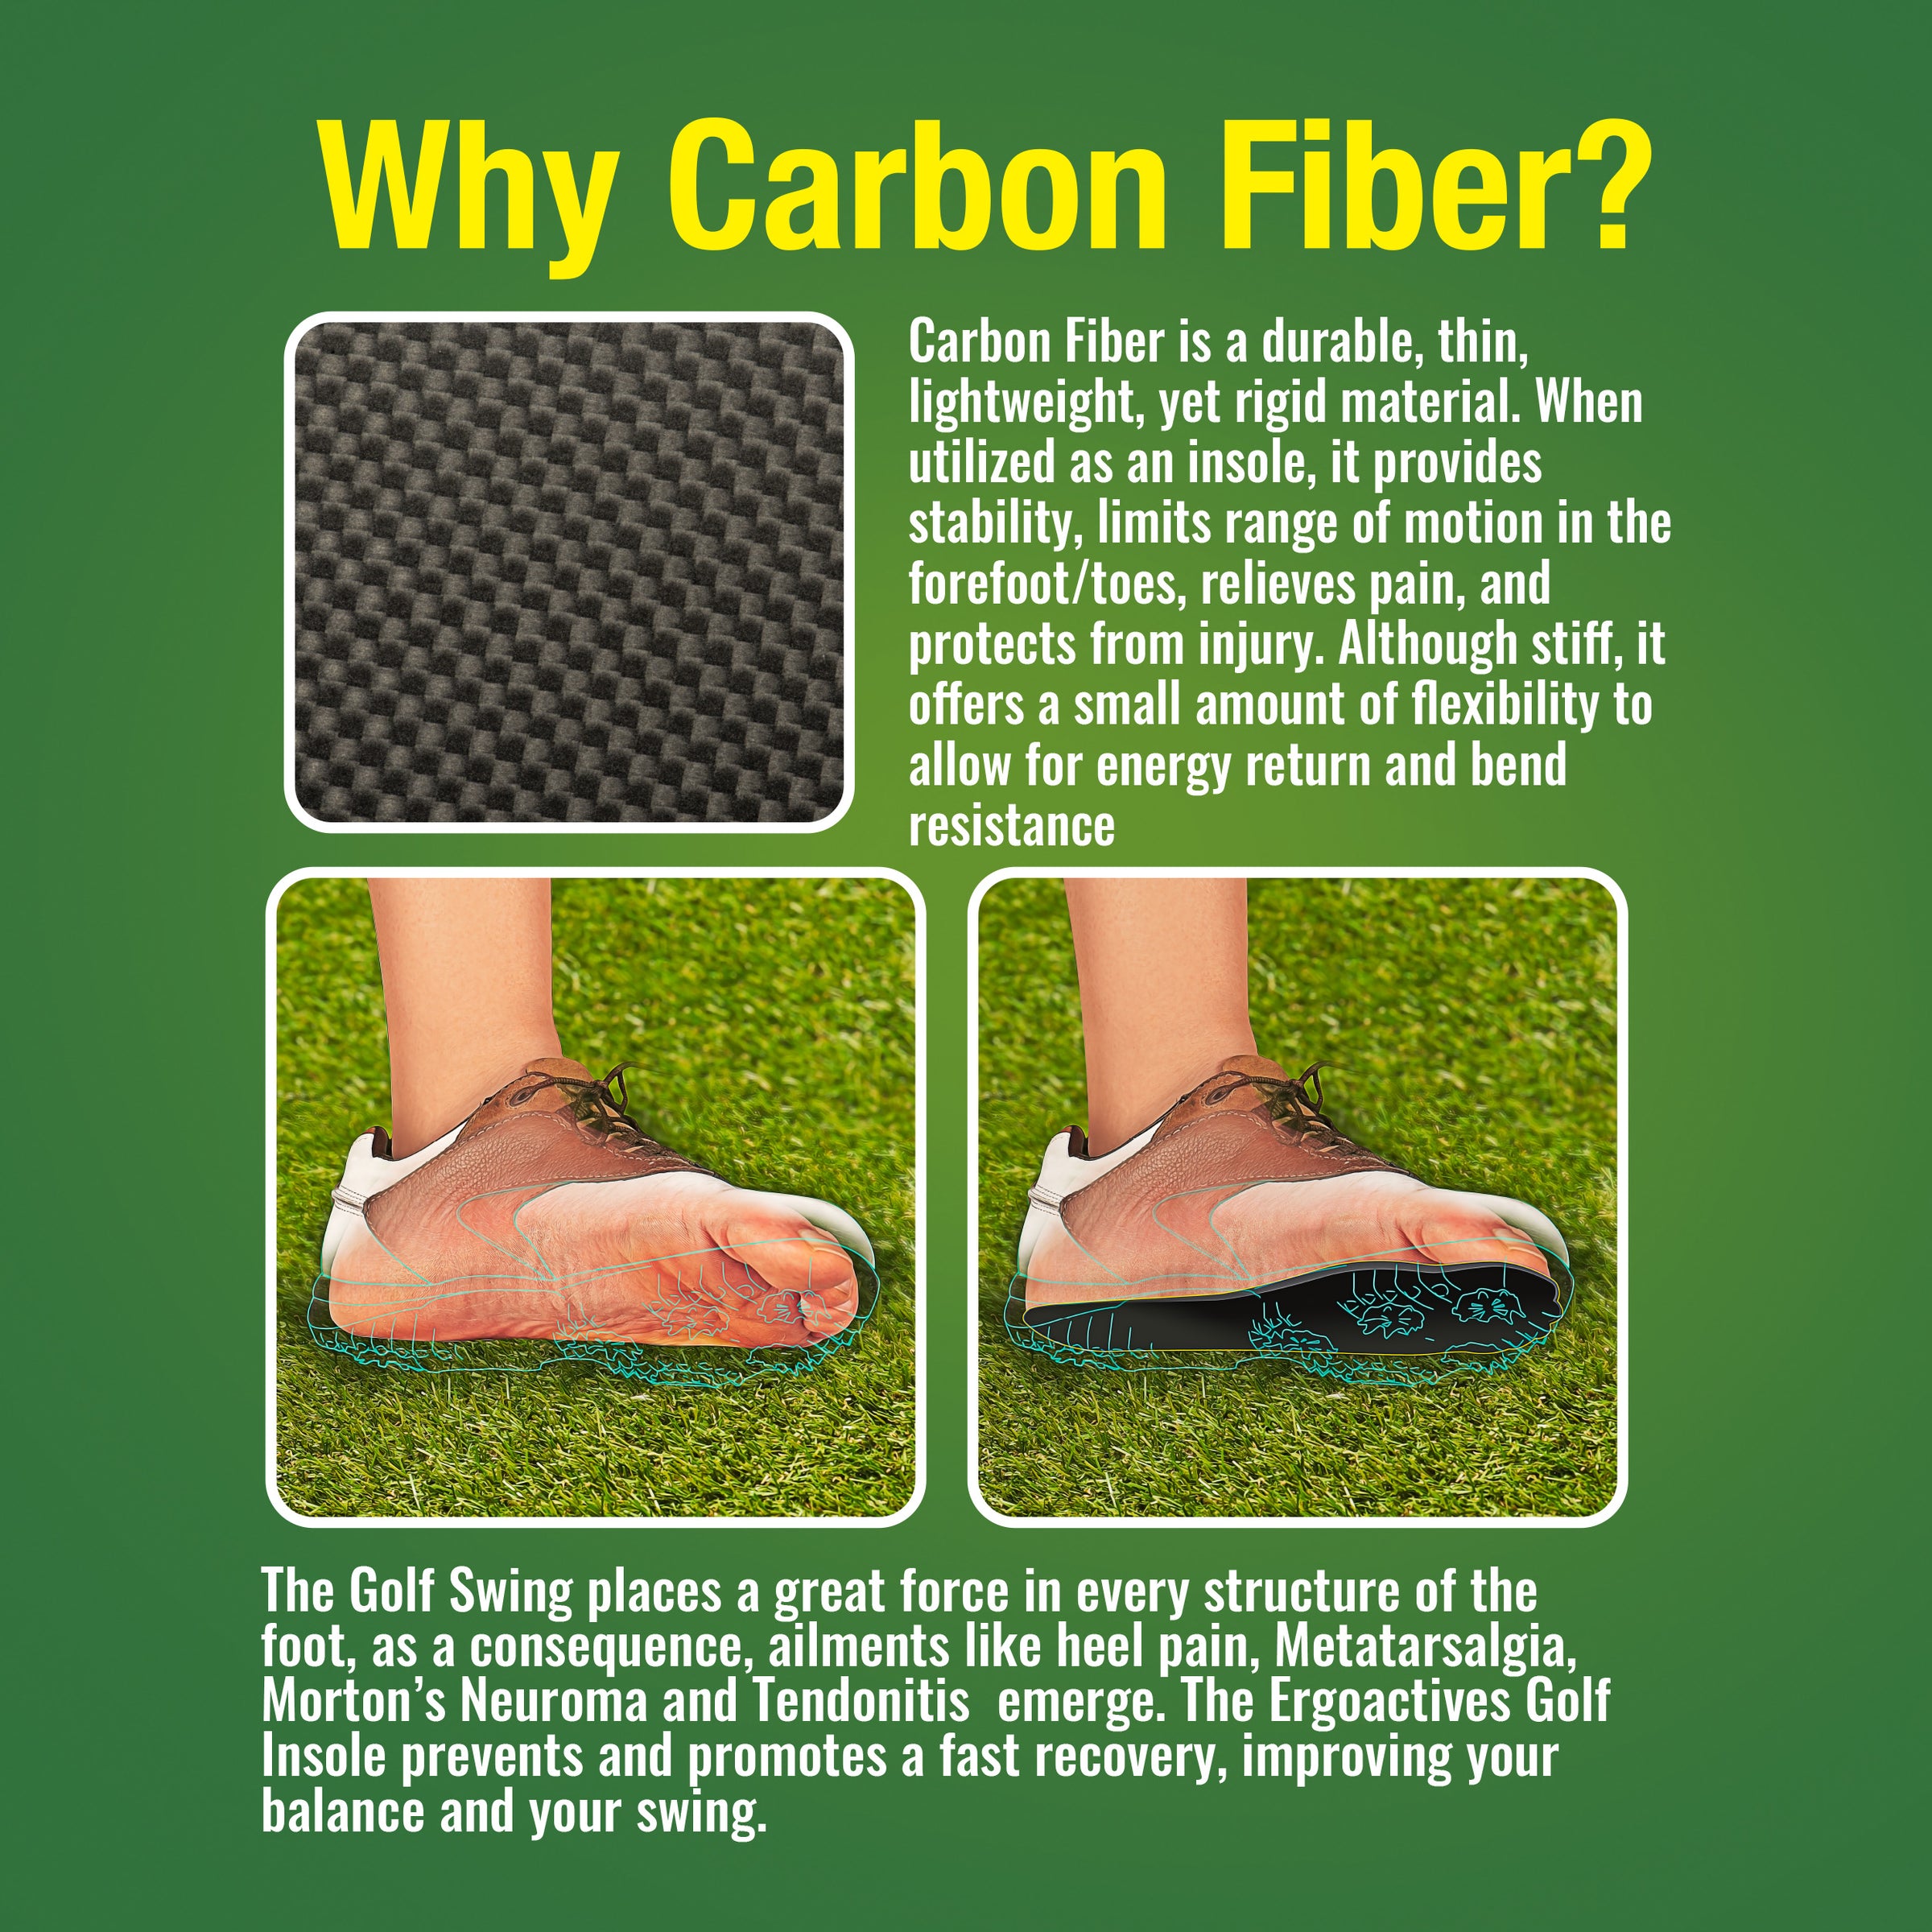 Ergo Carbon Fiber Insole Golfers Edition (1 Unit), Rigid with